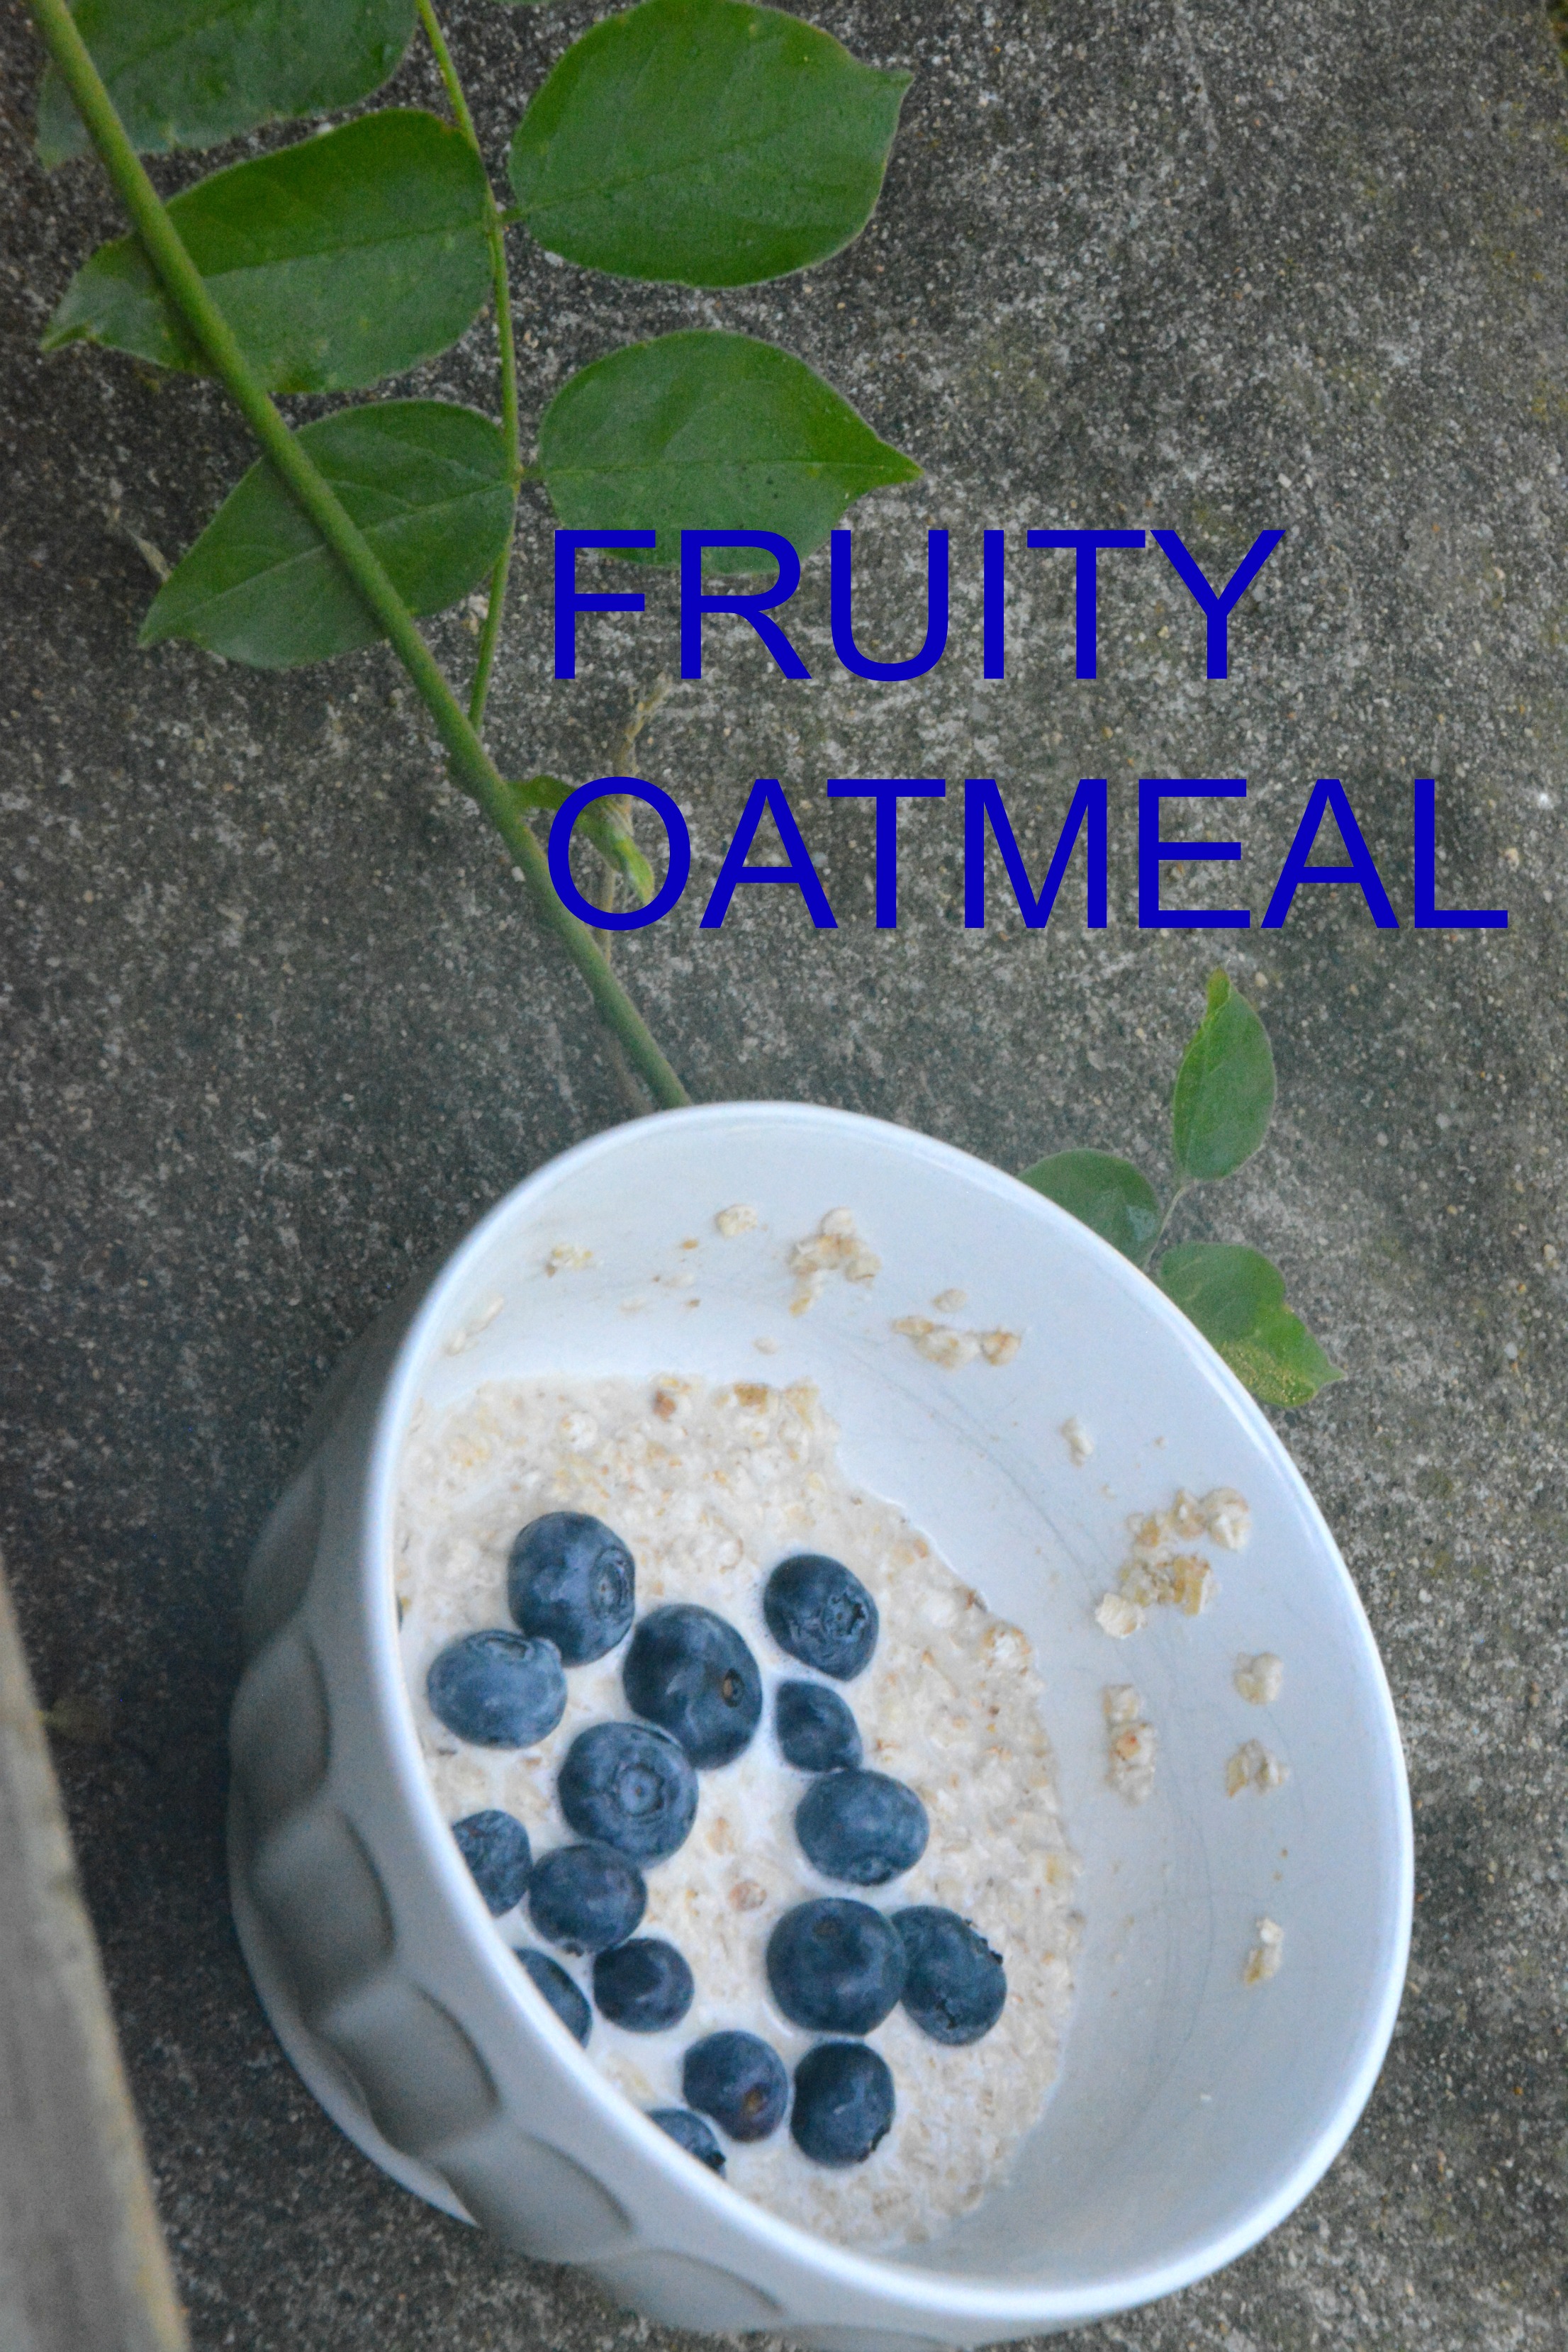 Fruity Oatmeal